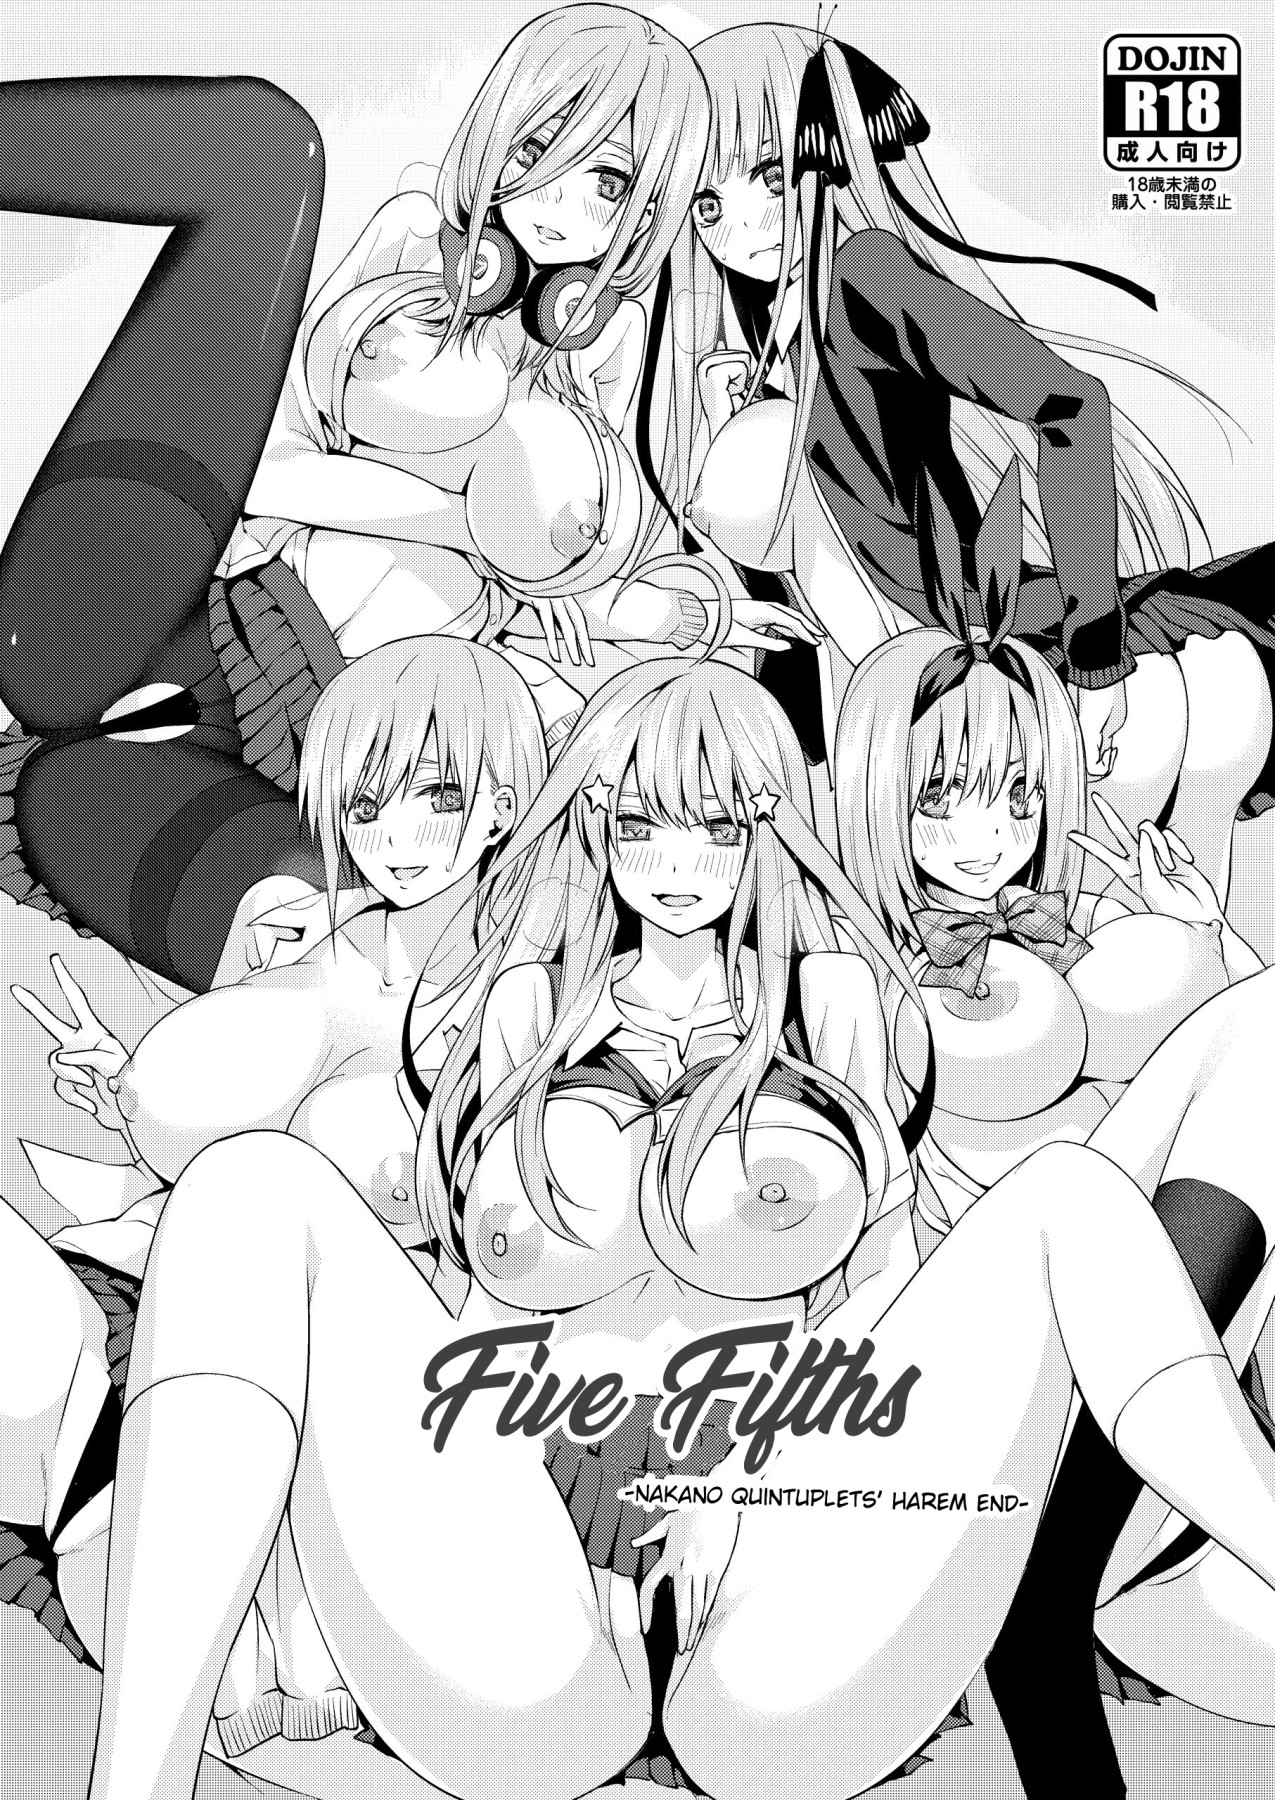 Hentai Manga Comic-Five Fifths -Nakano Quintuplets' Harem END--Read-1